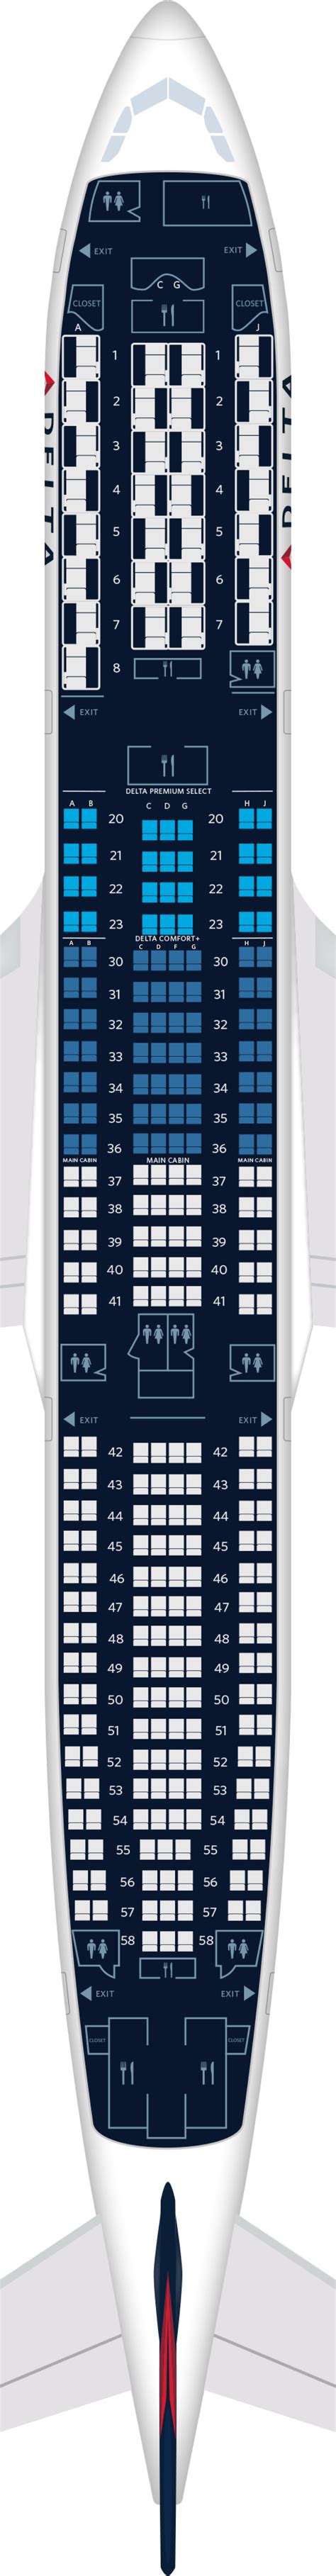 airbus a330 business class seats – seatguru delta – Brandma